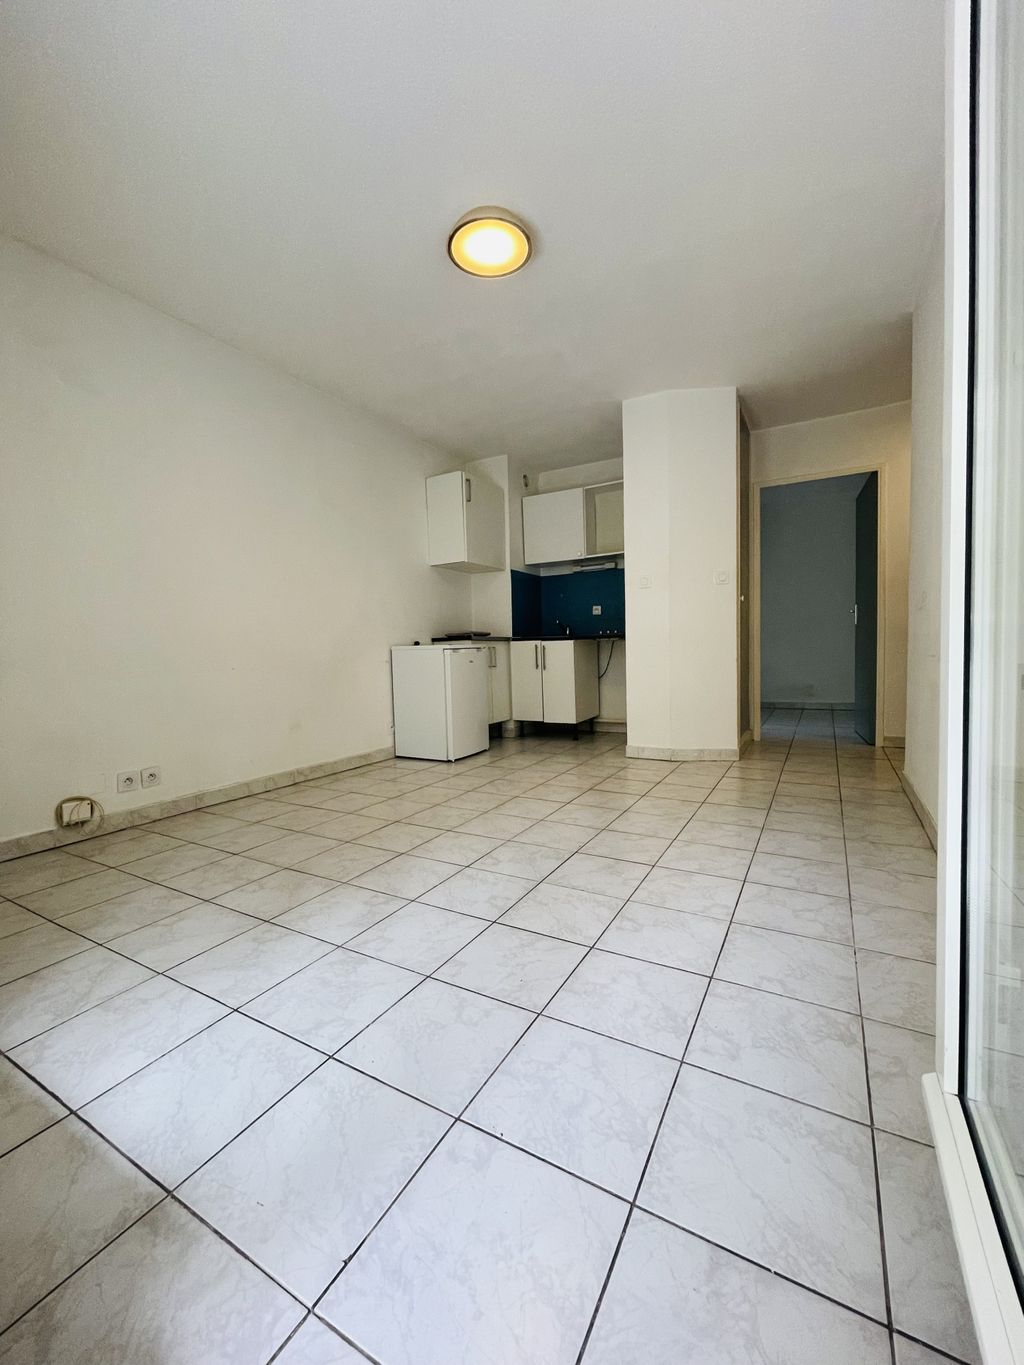 Achat appartement 2 pièce(s) Montpellier